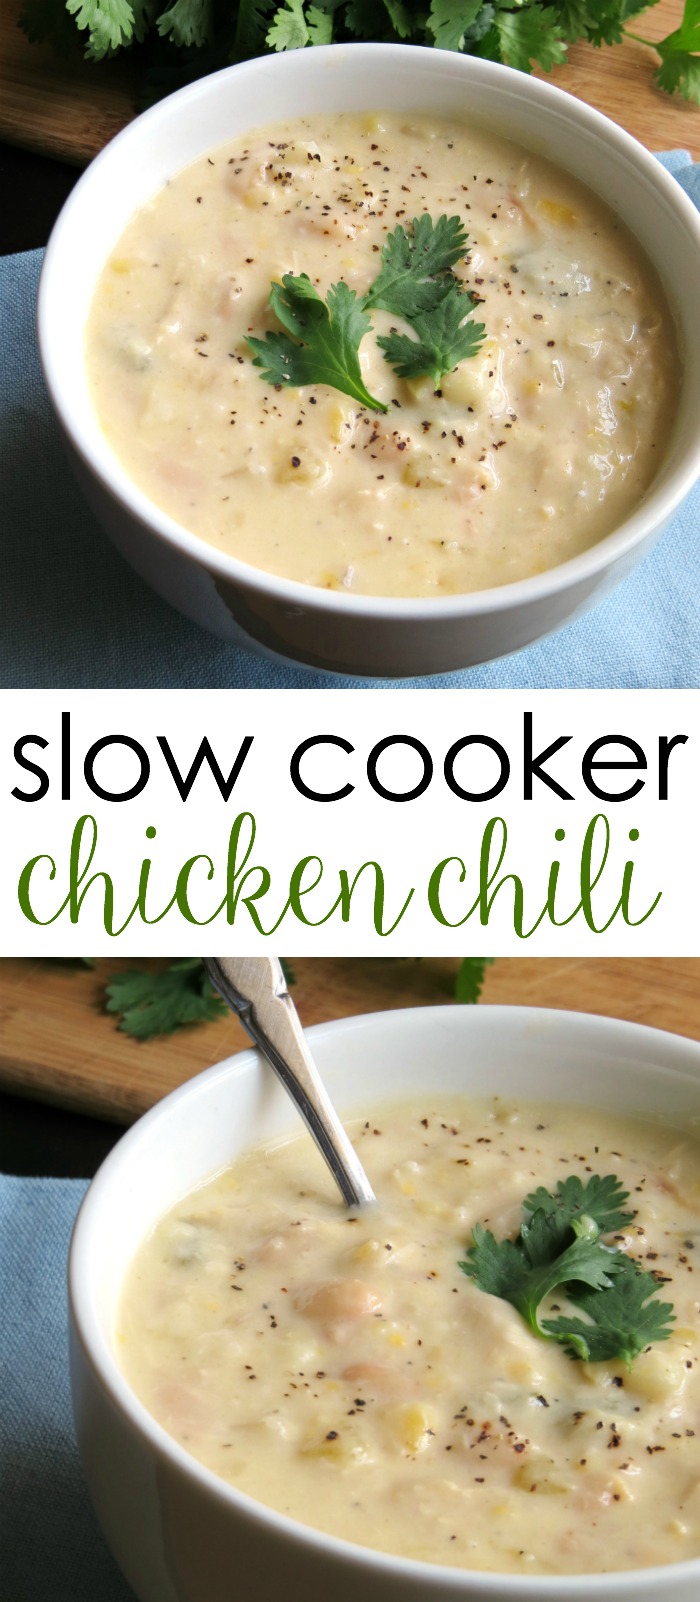 slow cooker white chicken chili